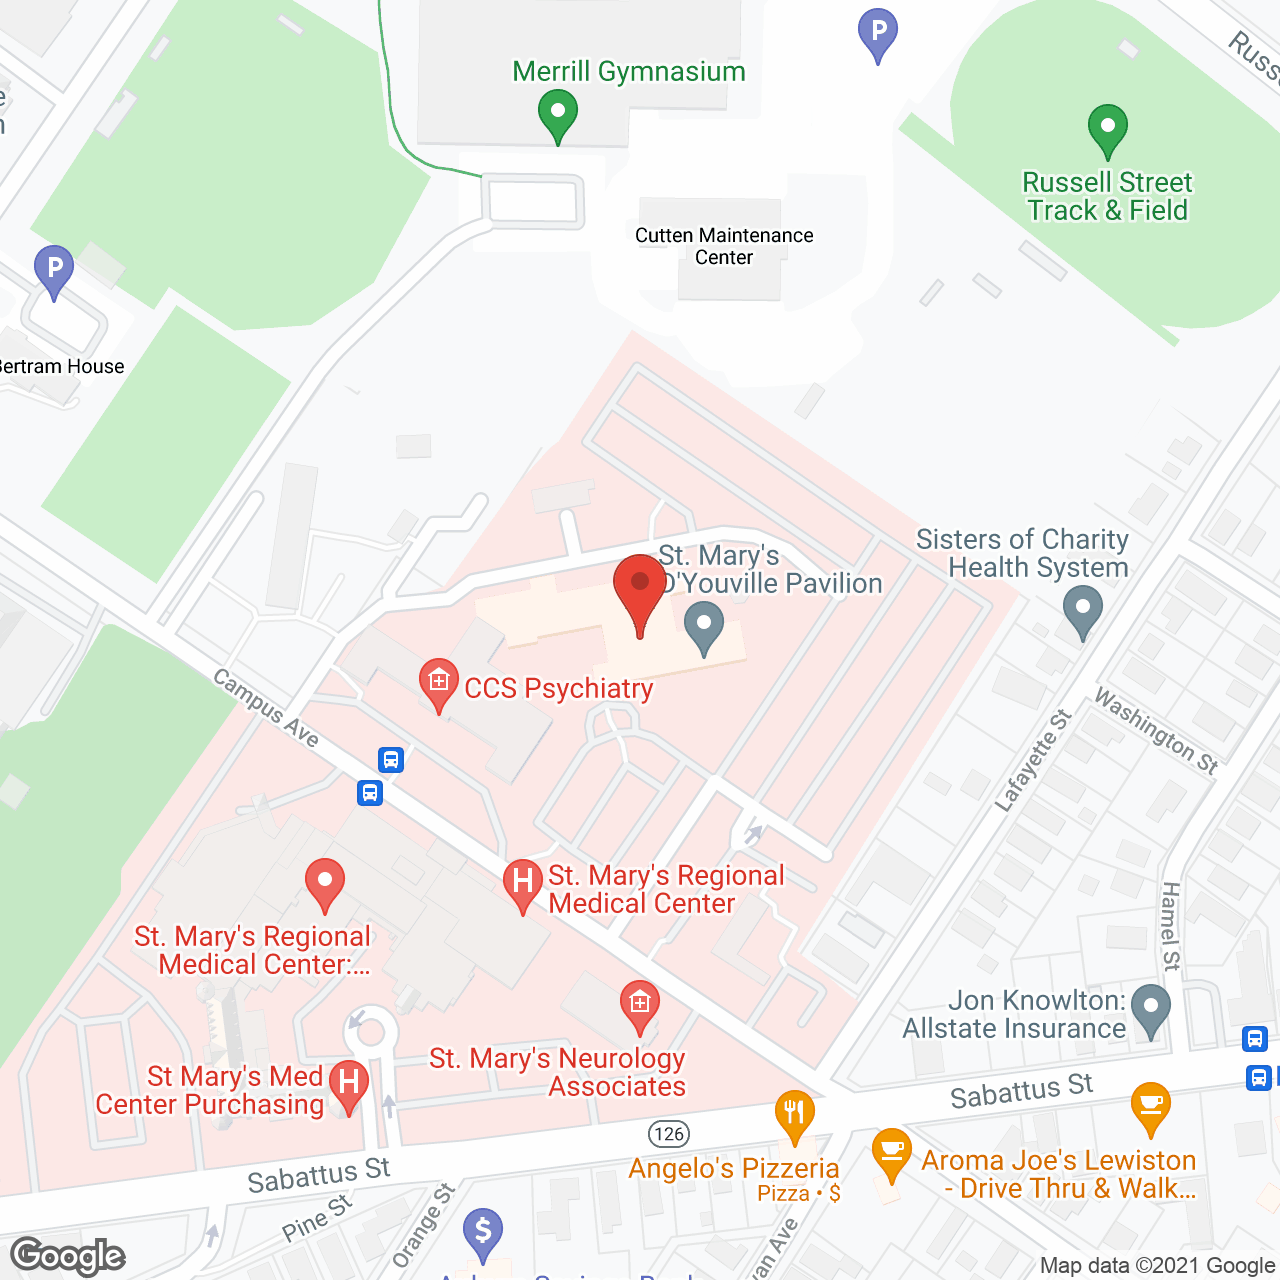 D'Youville Pavilion in google map